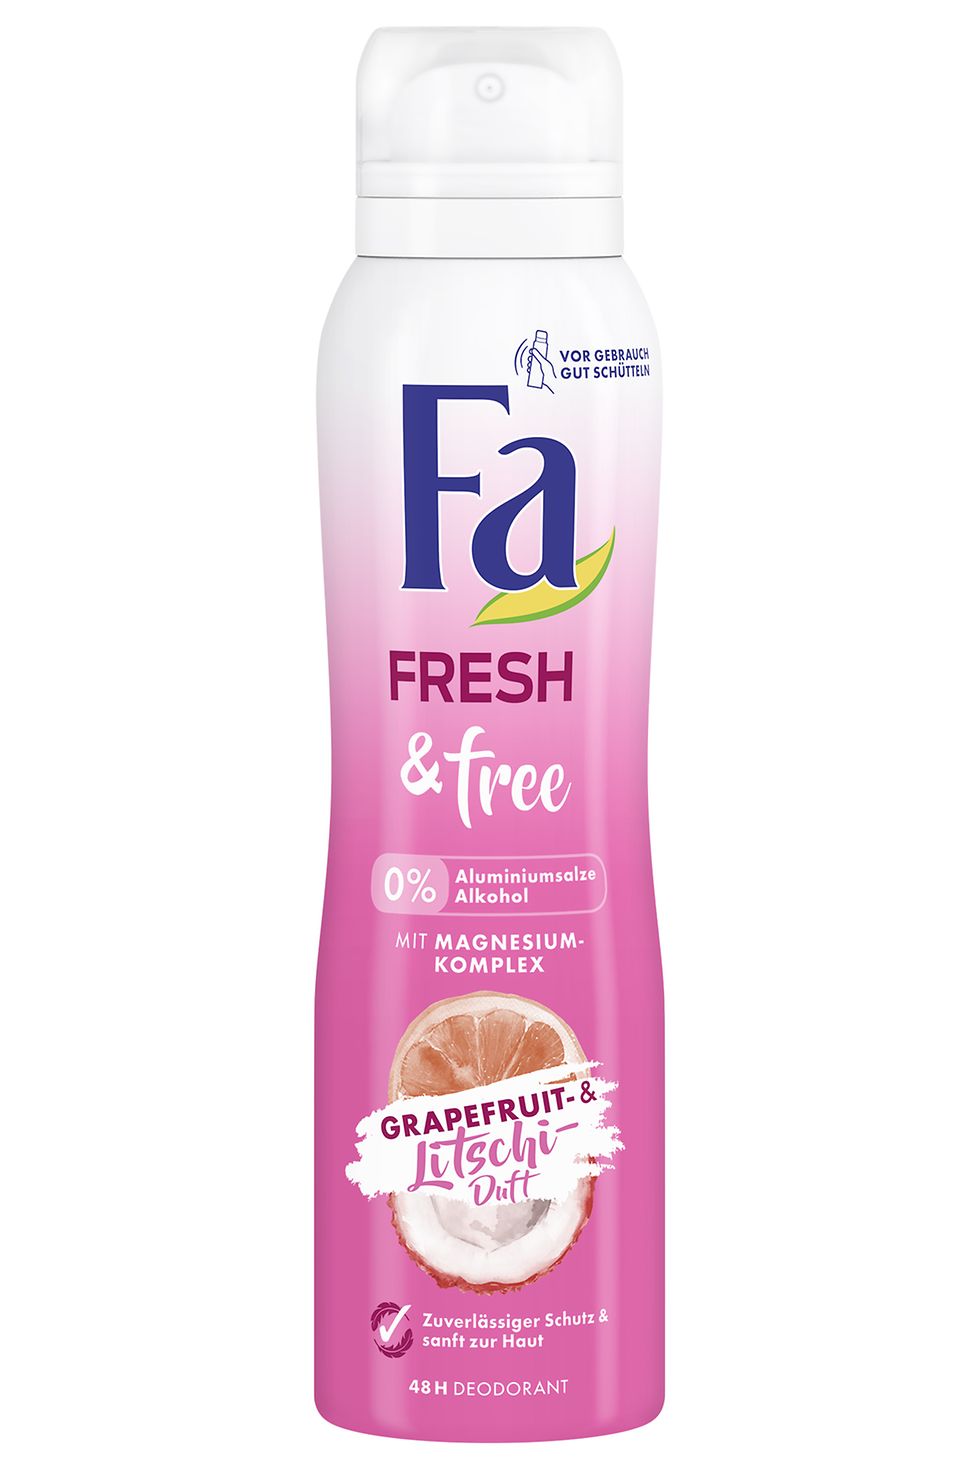 Fa Fresh & free Grapefruit- und Litschi-Duft, 48 H Deodorant